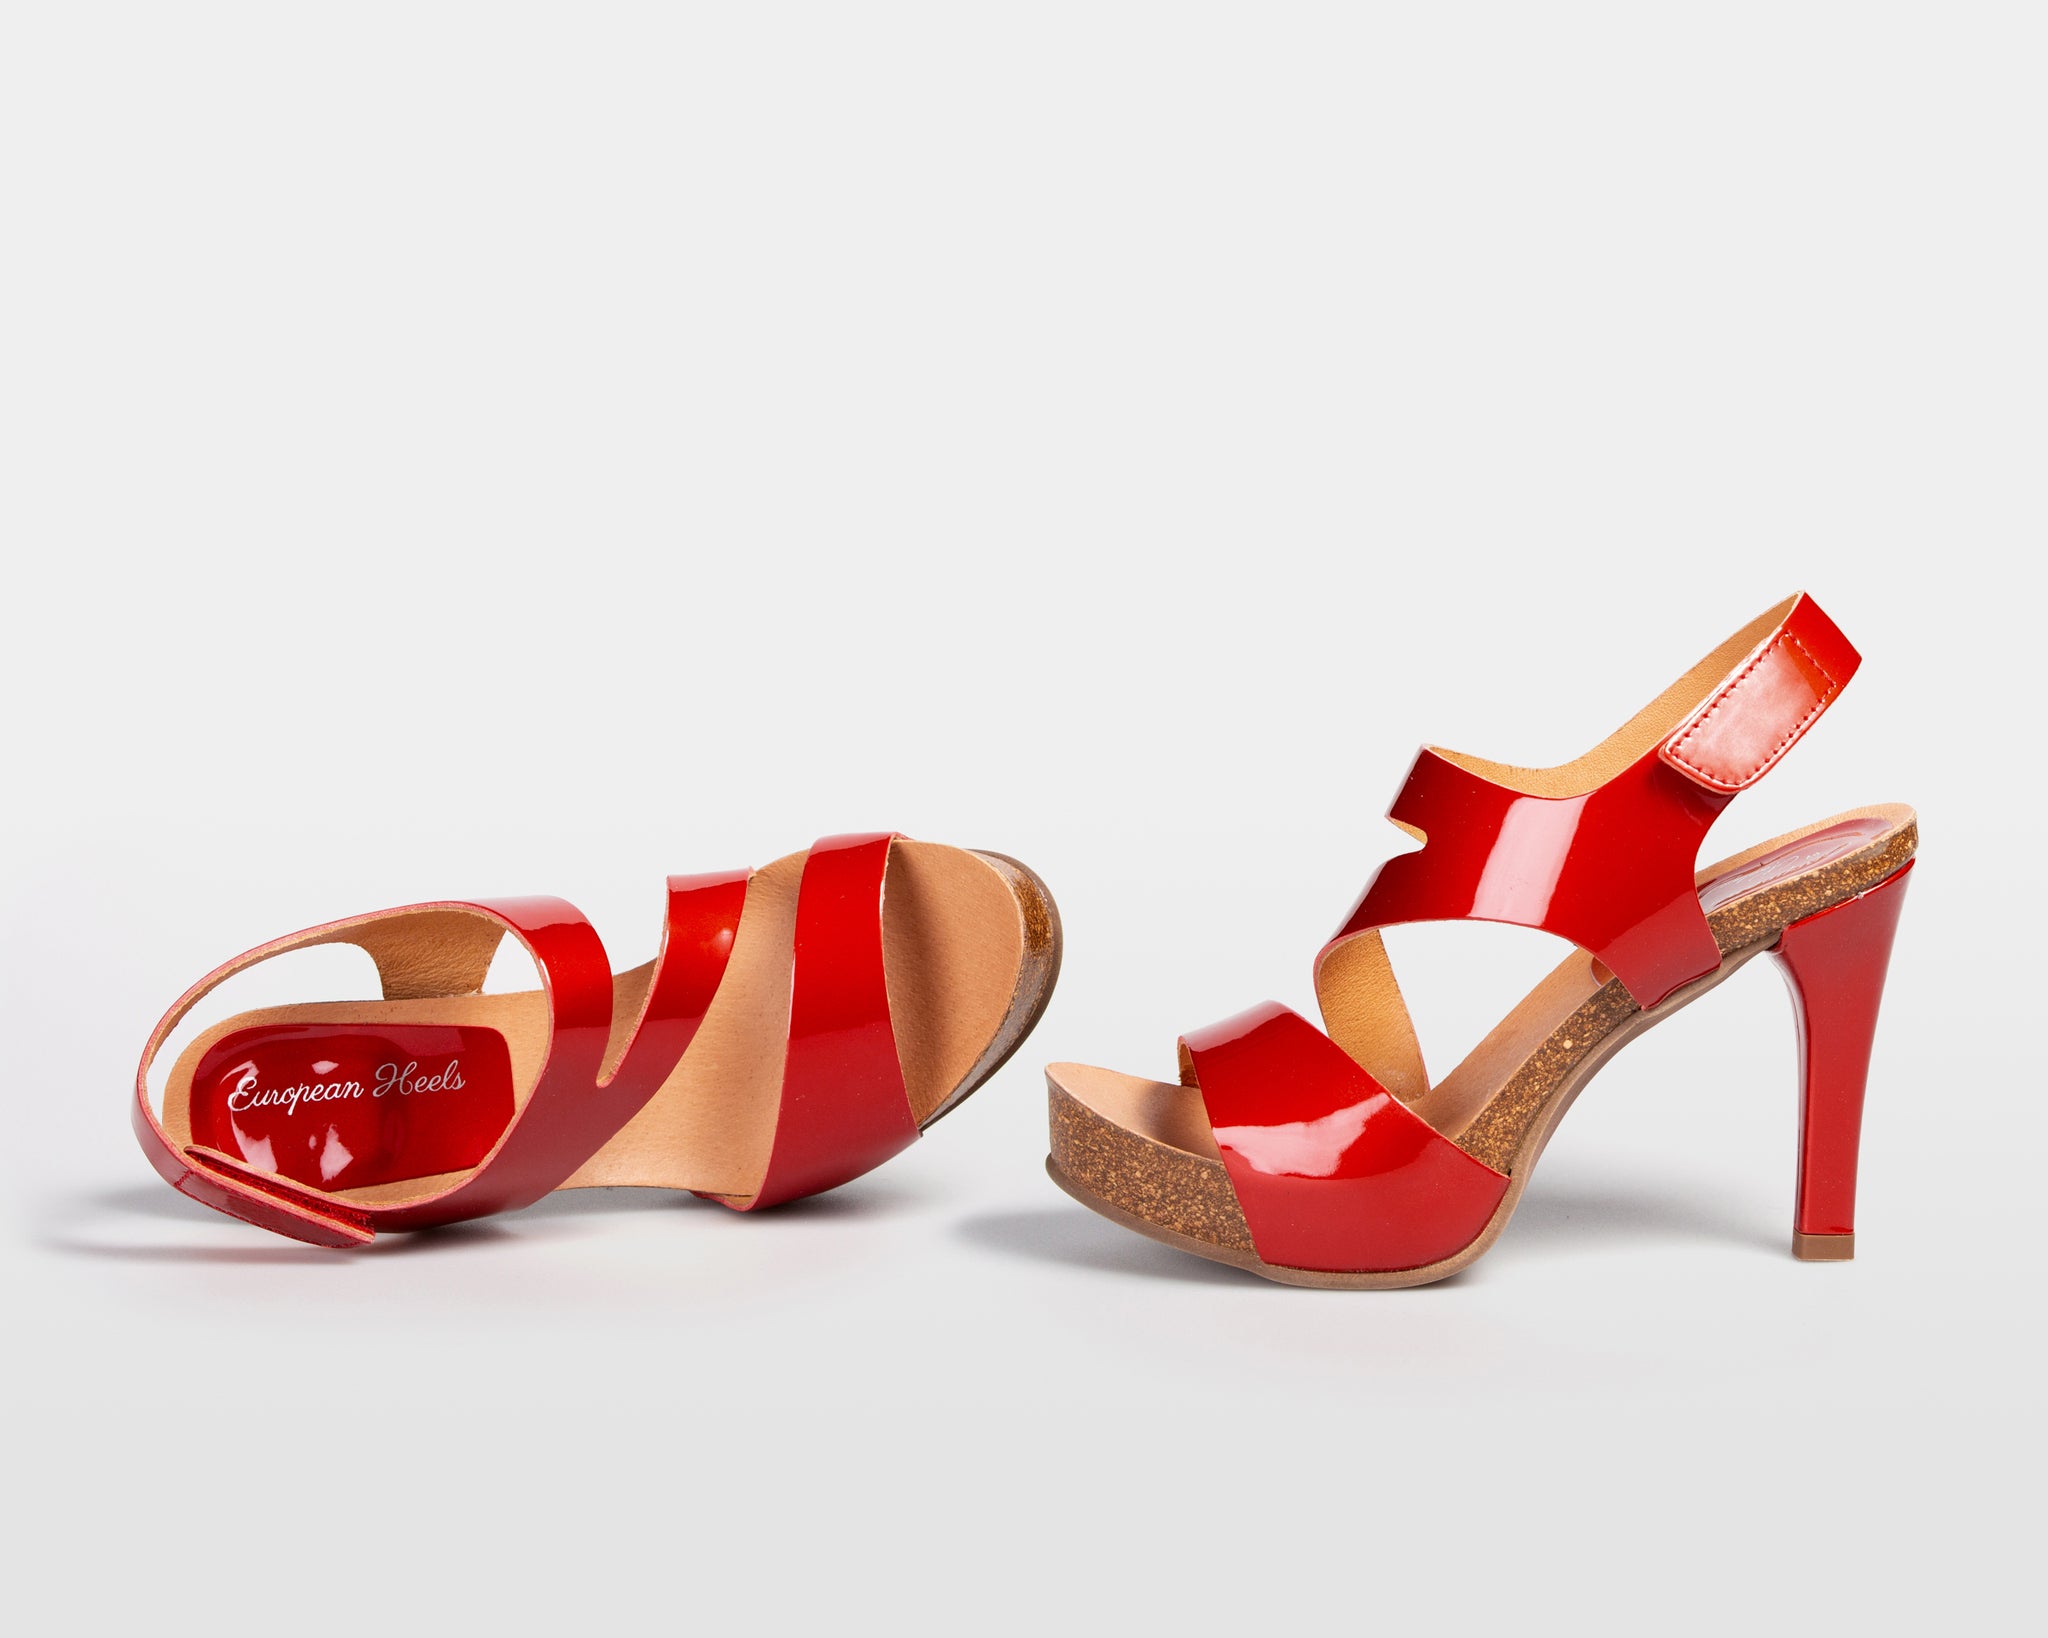 Design Your Own Wedding Shoes Online | by FreyaRose | Medium